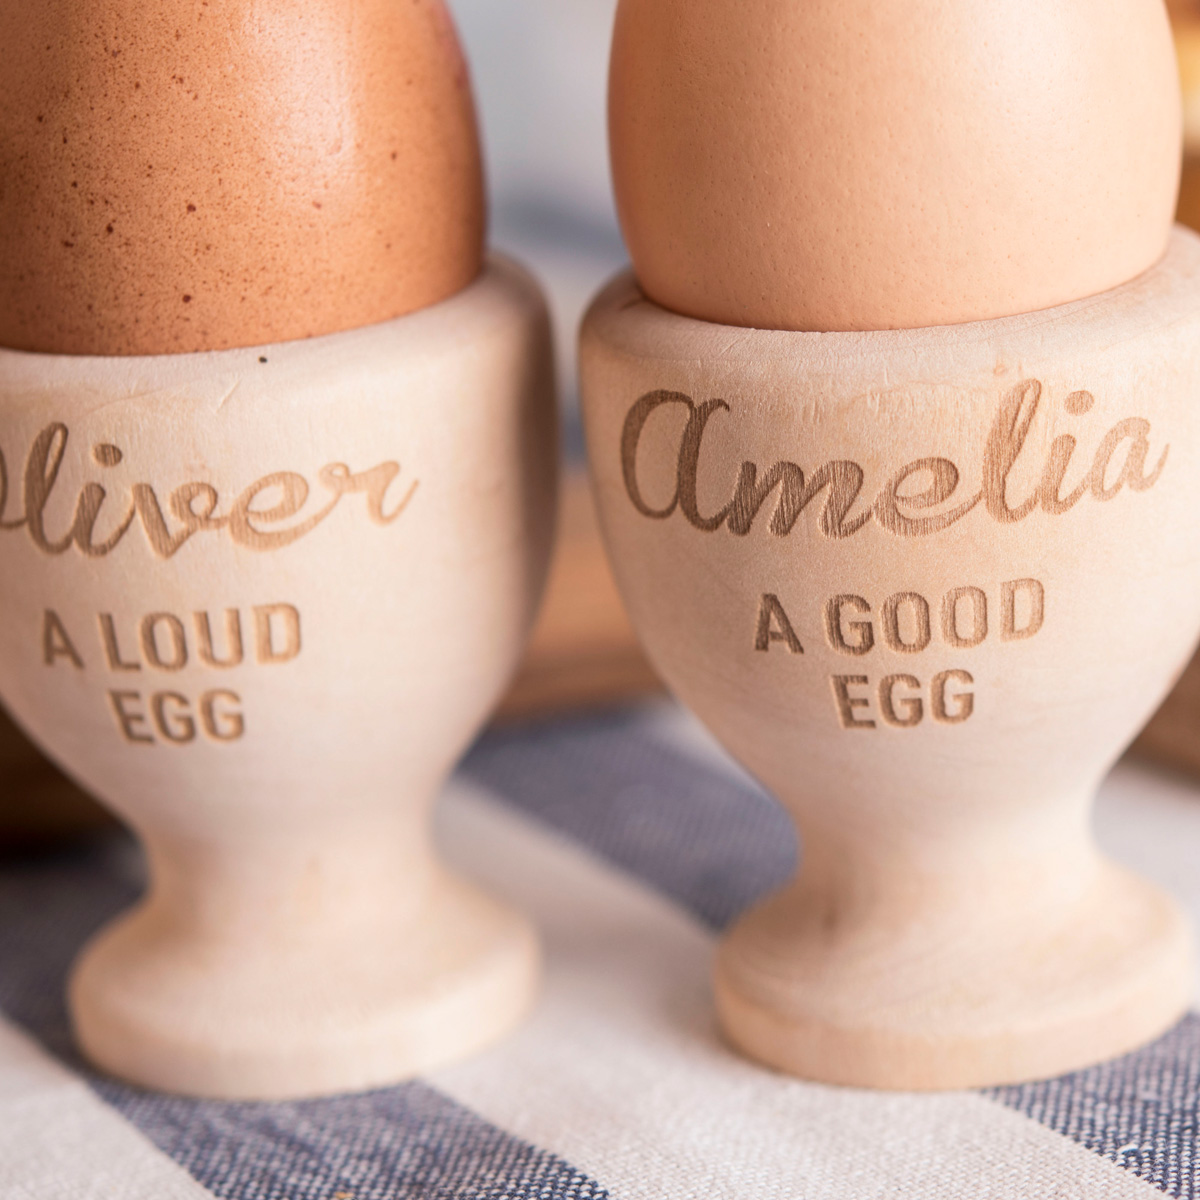 Personalised Set Of 2 Wooden Egg Cups - Good Egg, Loud Egg